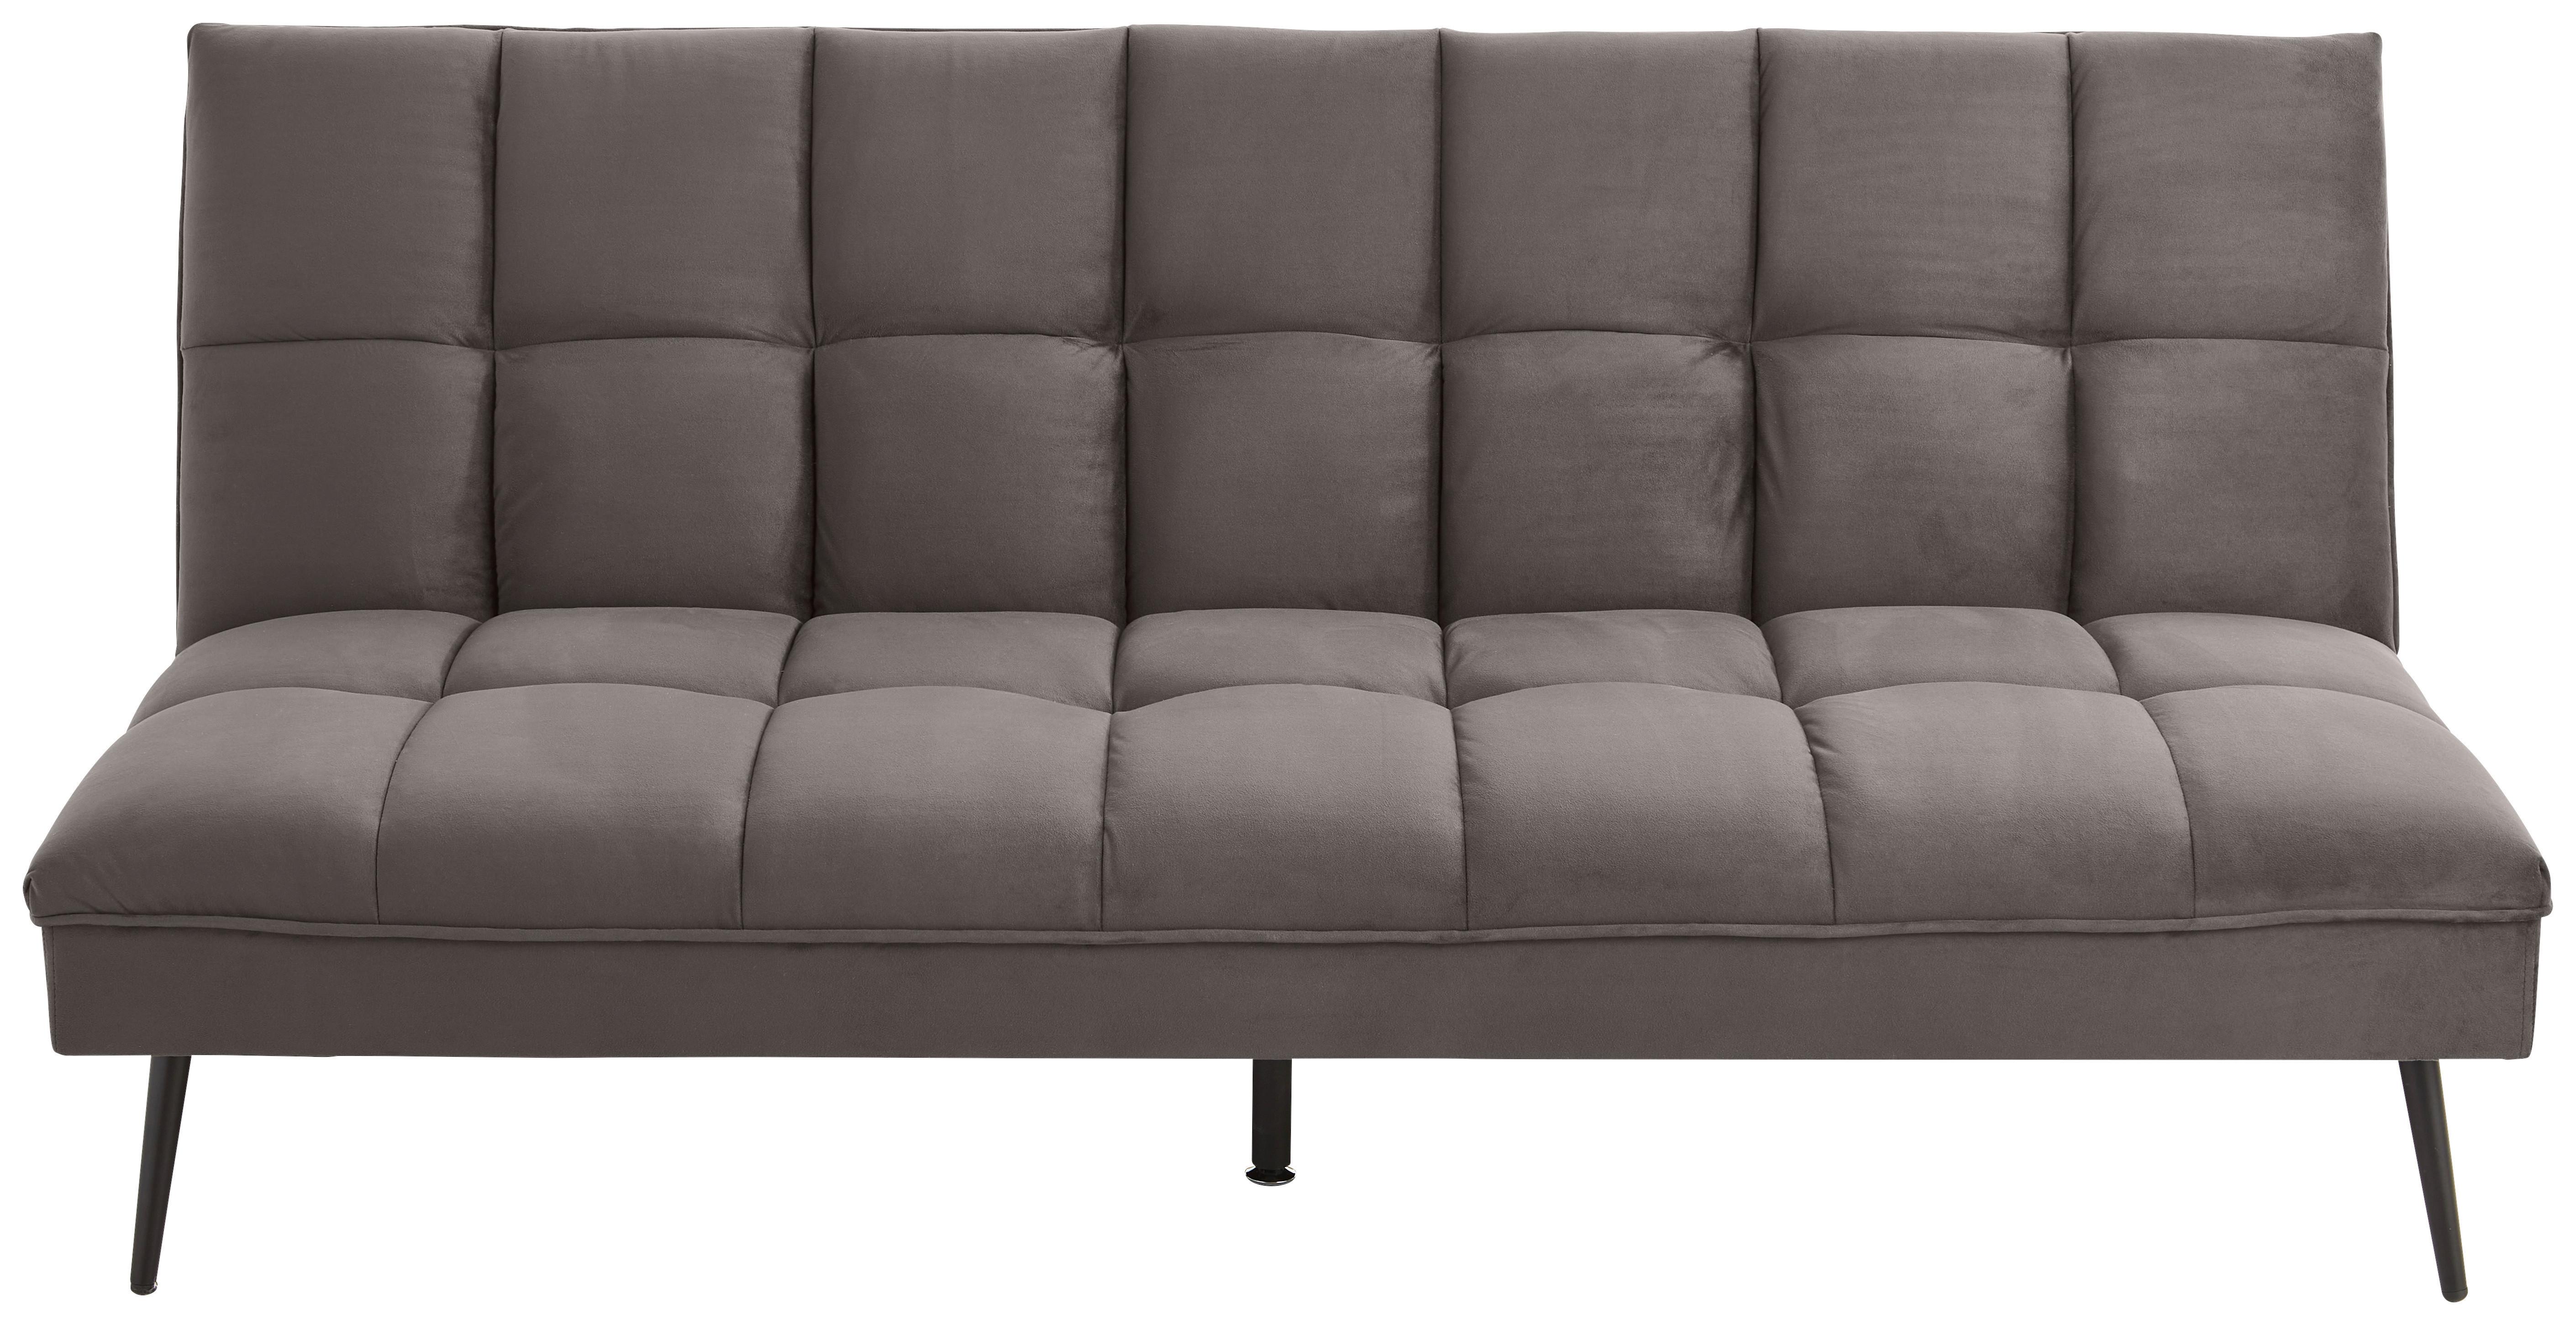 3-Sitzer-Sofa mit Schlaffunkt. Pur Grau Samtbezug - Schwarz/Grau, MODERN, Textil (178/84/98cm) - MID.YOU